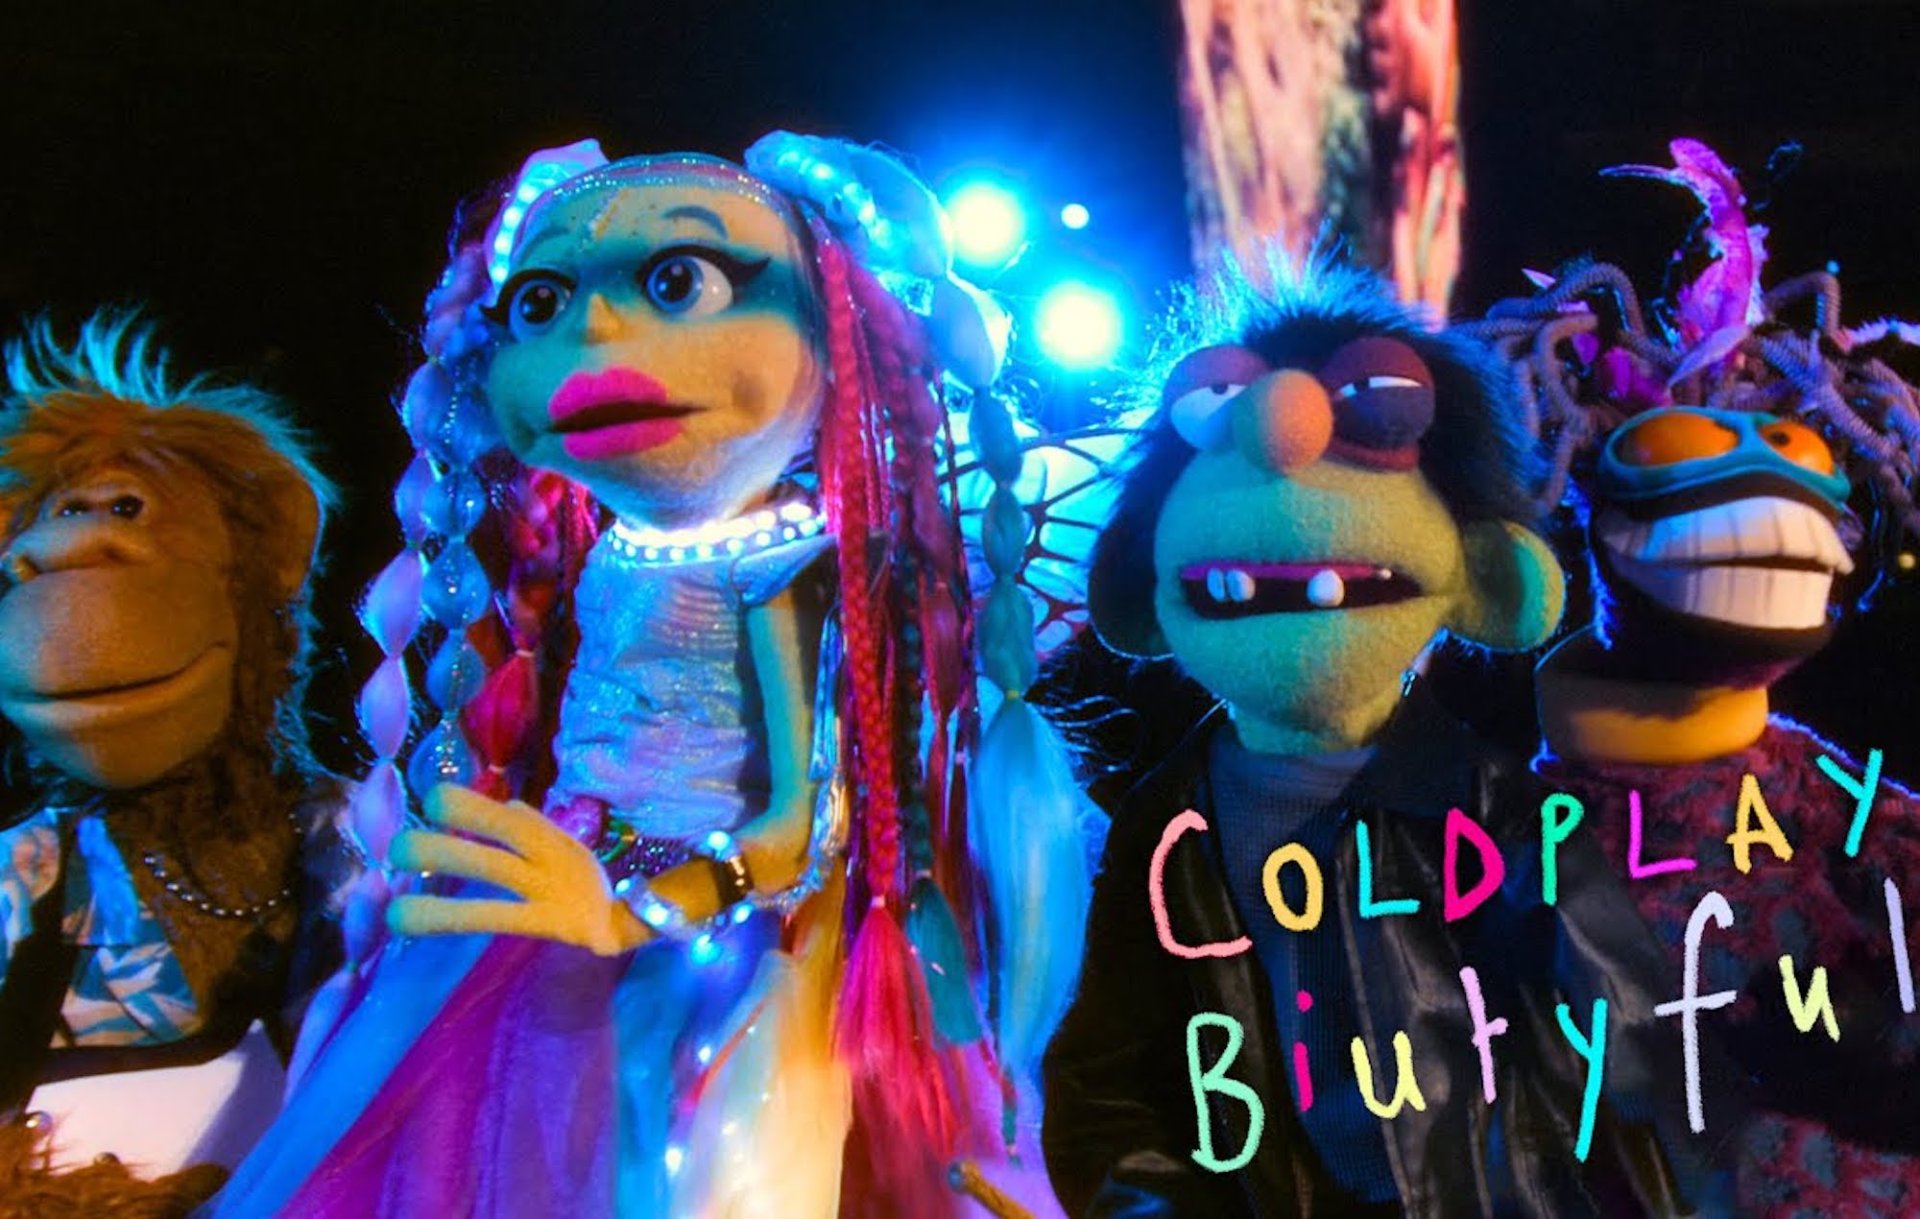 Coldplay ปล่อยมิวสิกวิดีโอ “Biutyful” มีวงหุ่นมือ ‘The Weirdos’ มาร่วมแจม